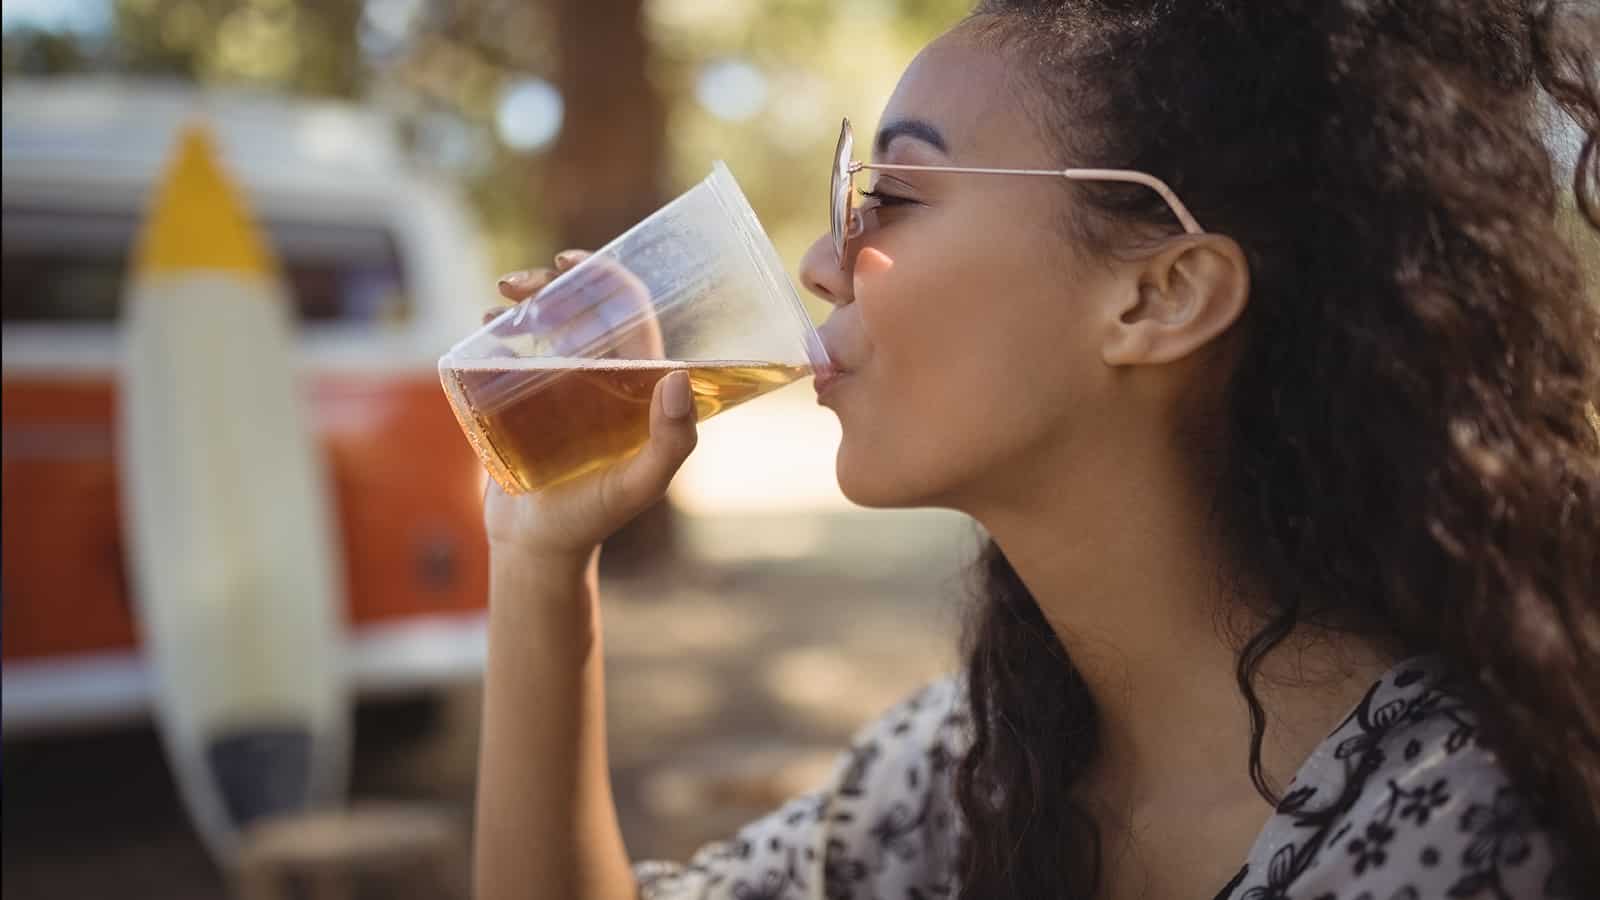 UK Study Warns That Even Light Drinking Decreases Health